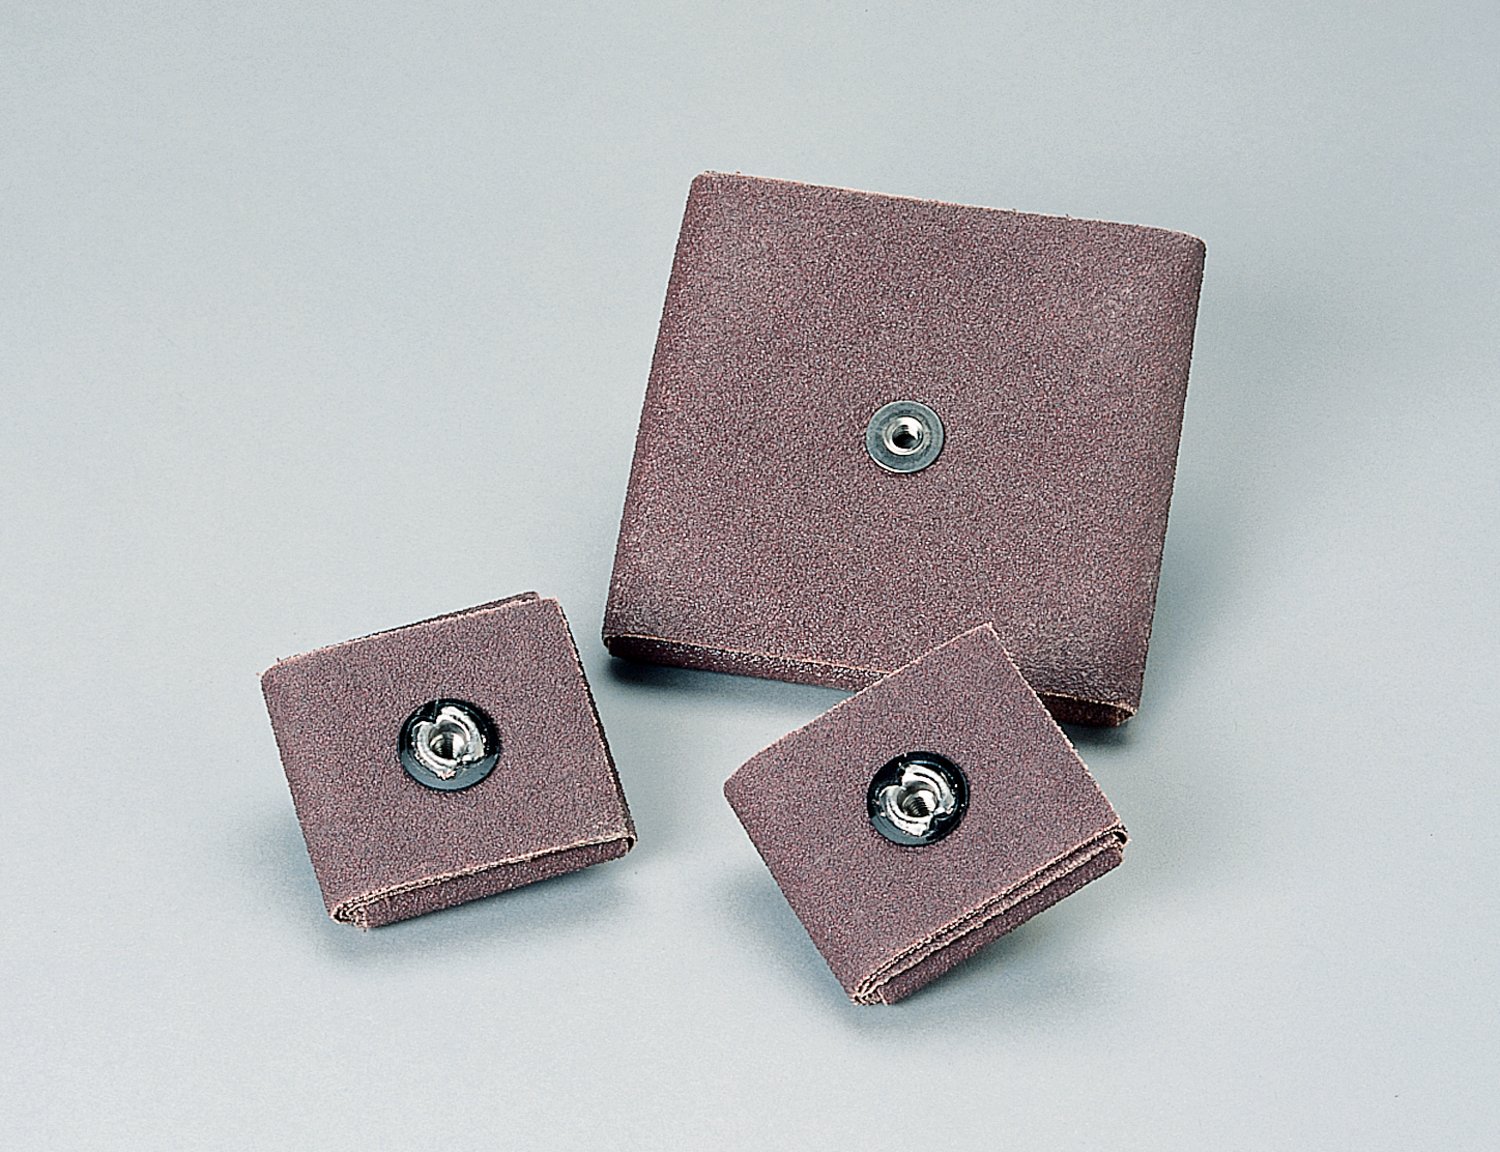 7100105431 - Standard Abrasives A/O Square Pad 724055, 3/4 x 3/4 in x 3/4 in,
1/4-20, 80, 100/Carton, 1000 ea/Case